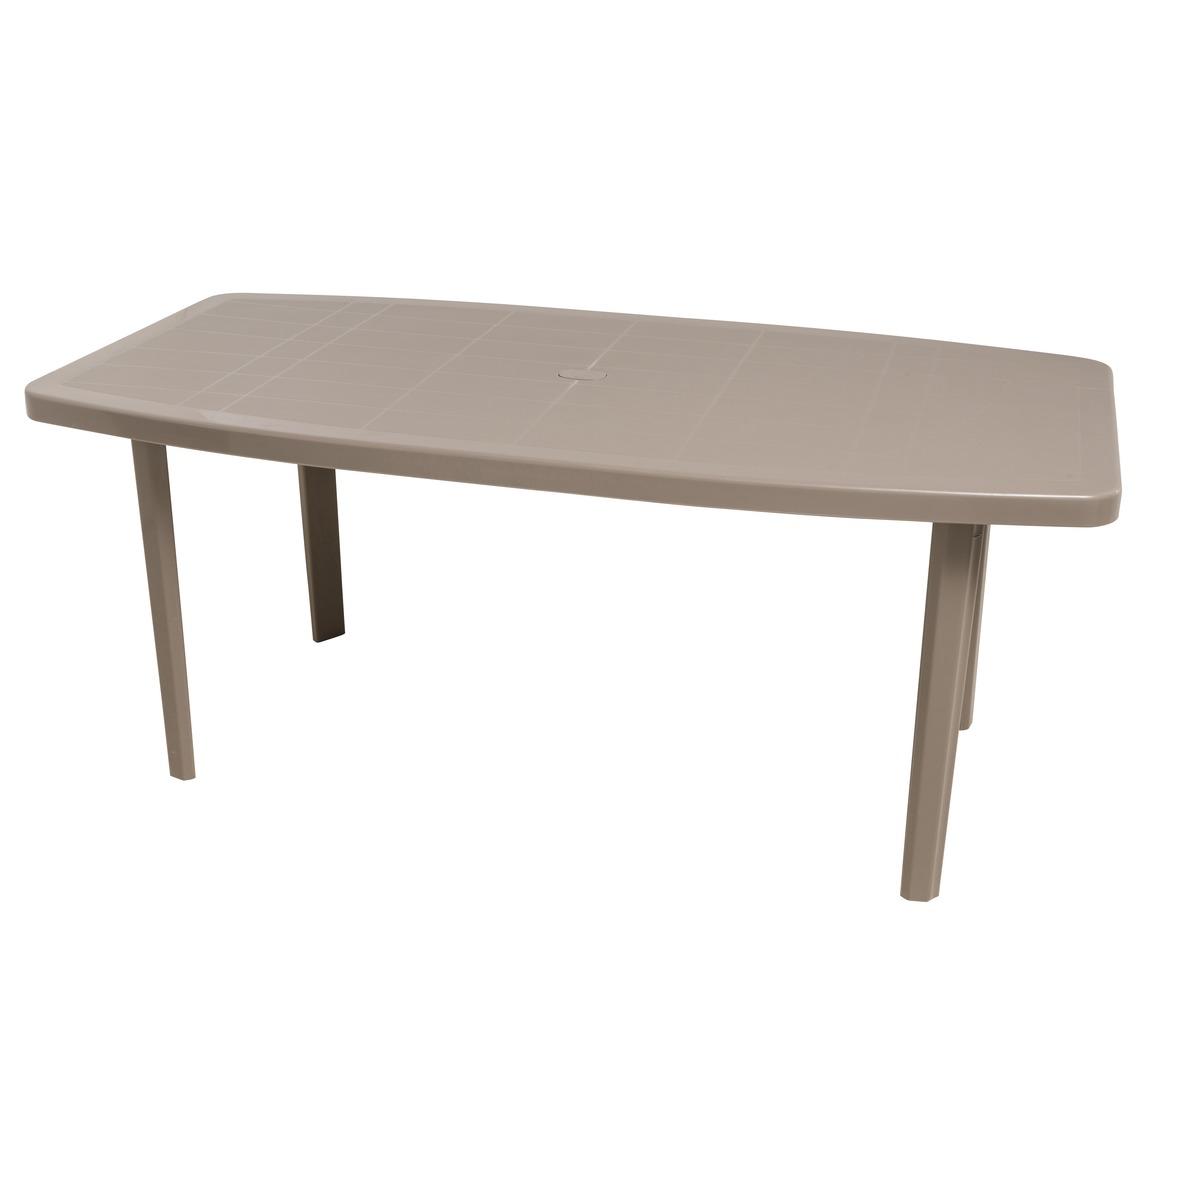 Table rectangulaire - 87 x 176 x H 72 cm - marron taupe